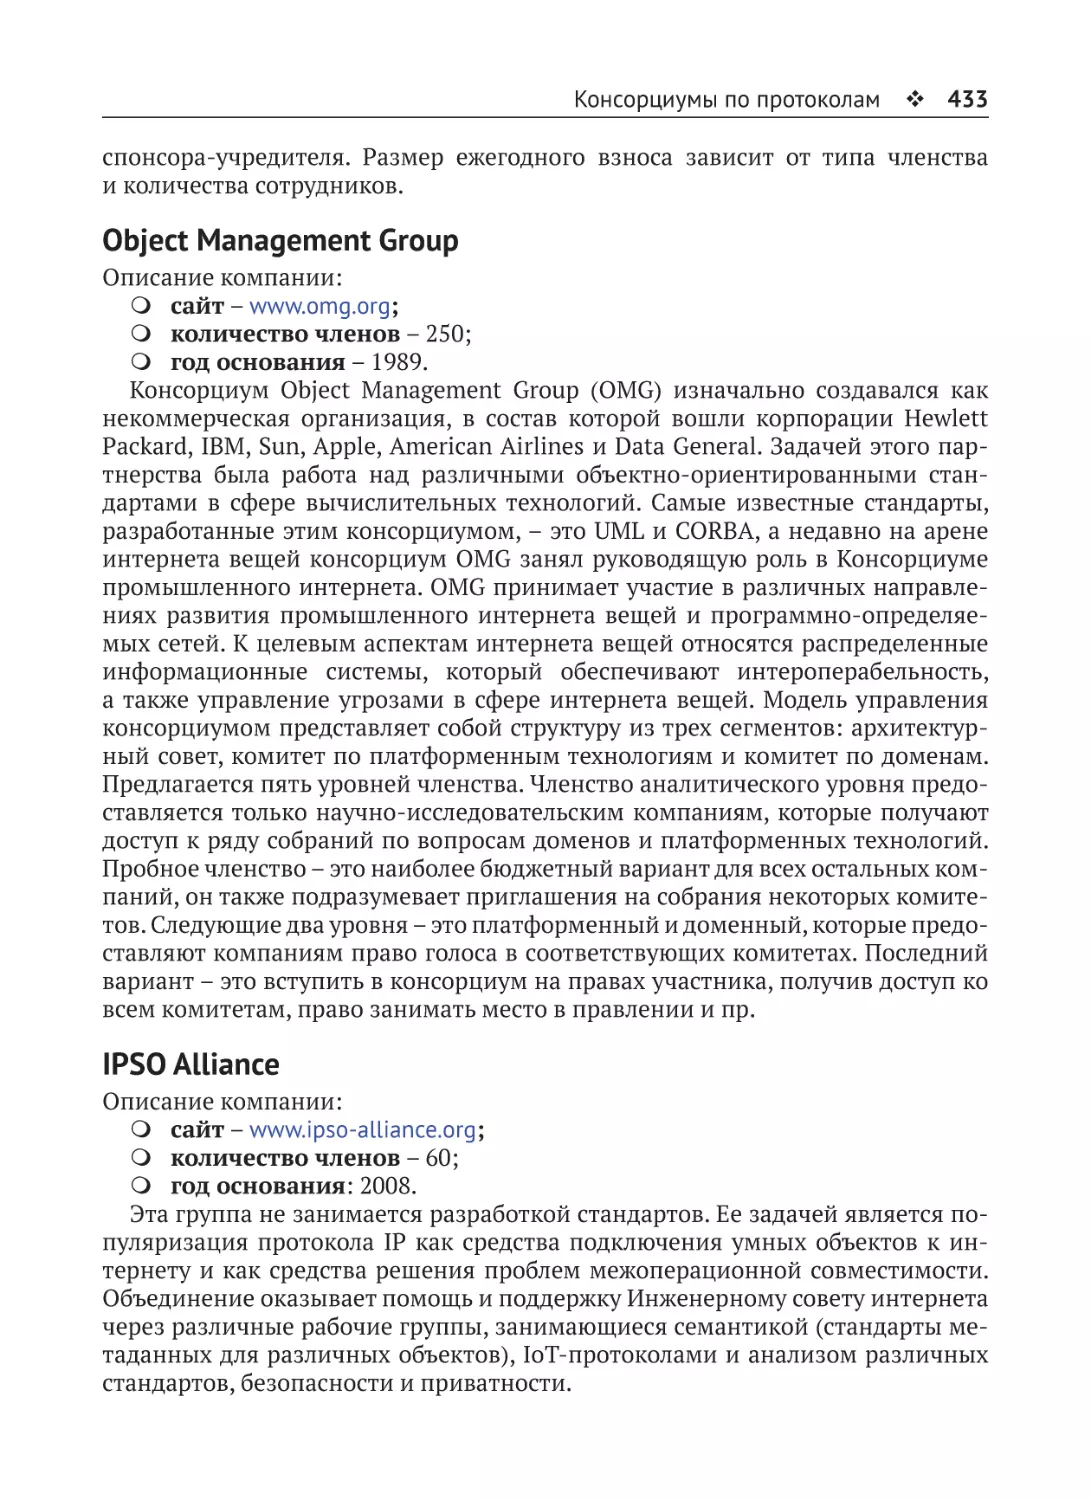 Object Management Group
IPSO Alliance